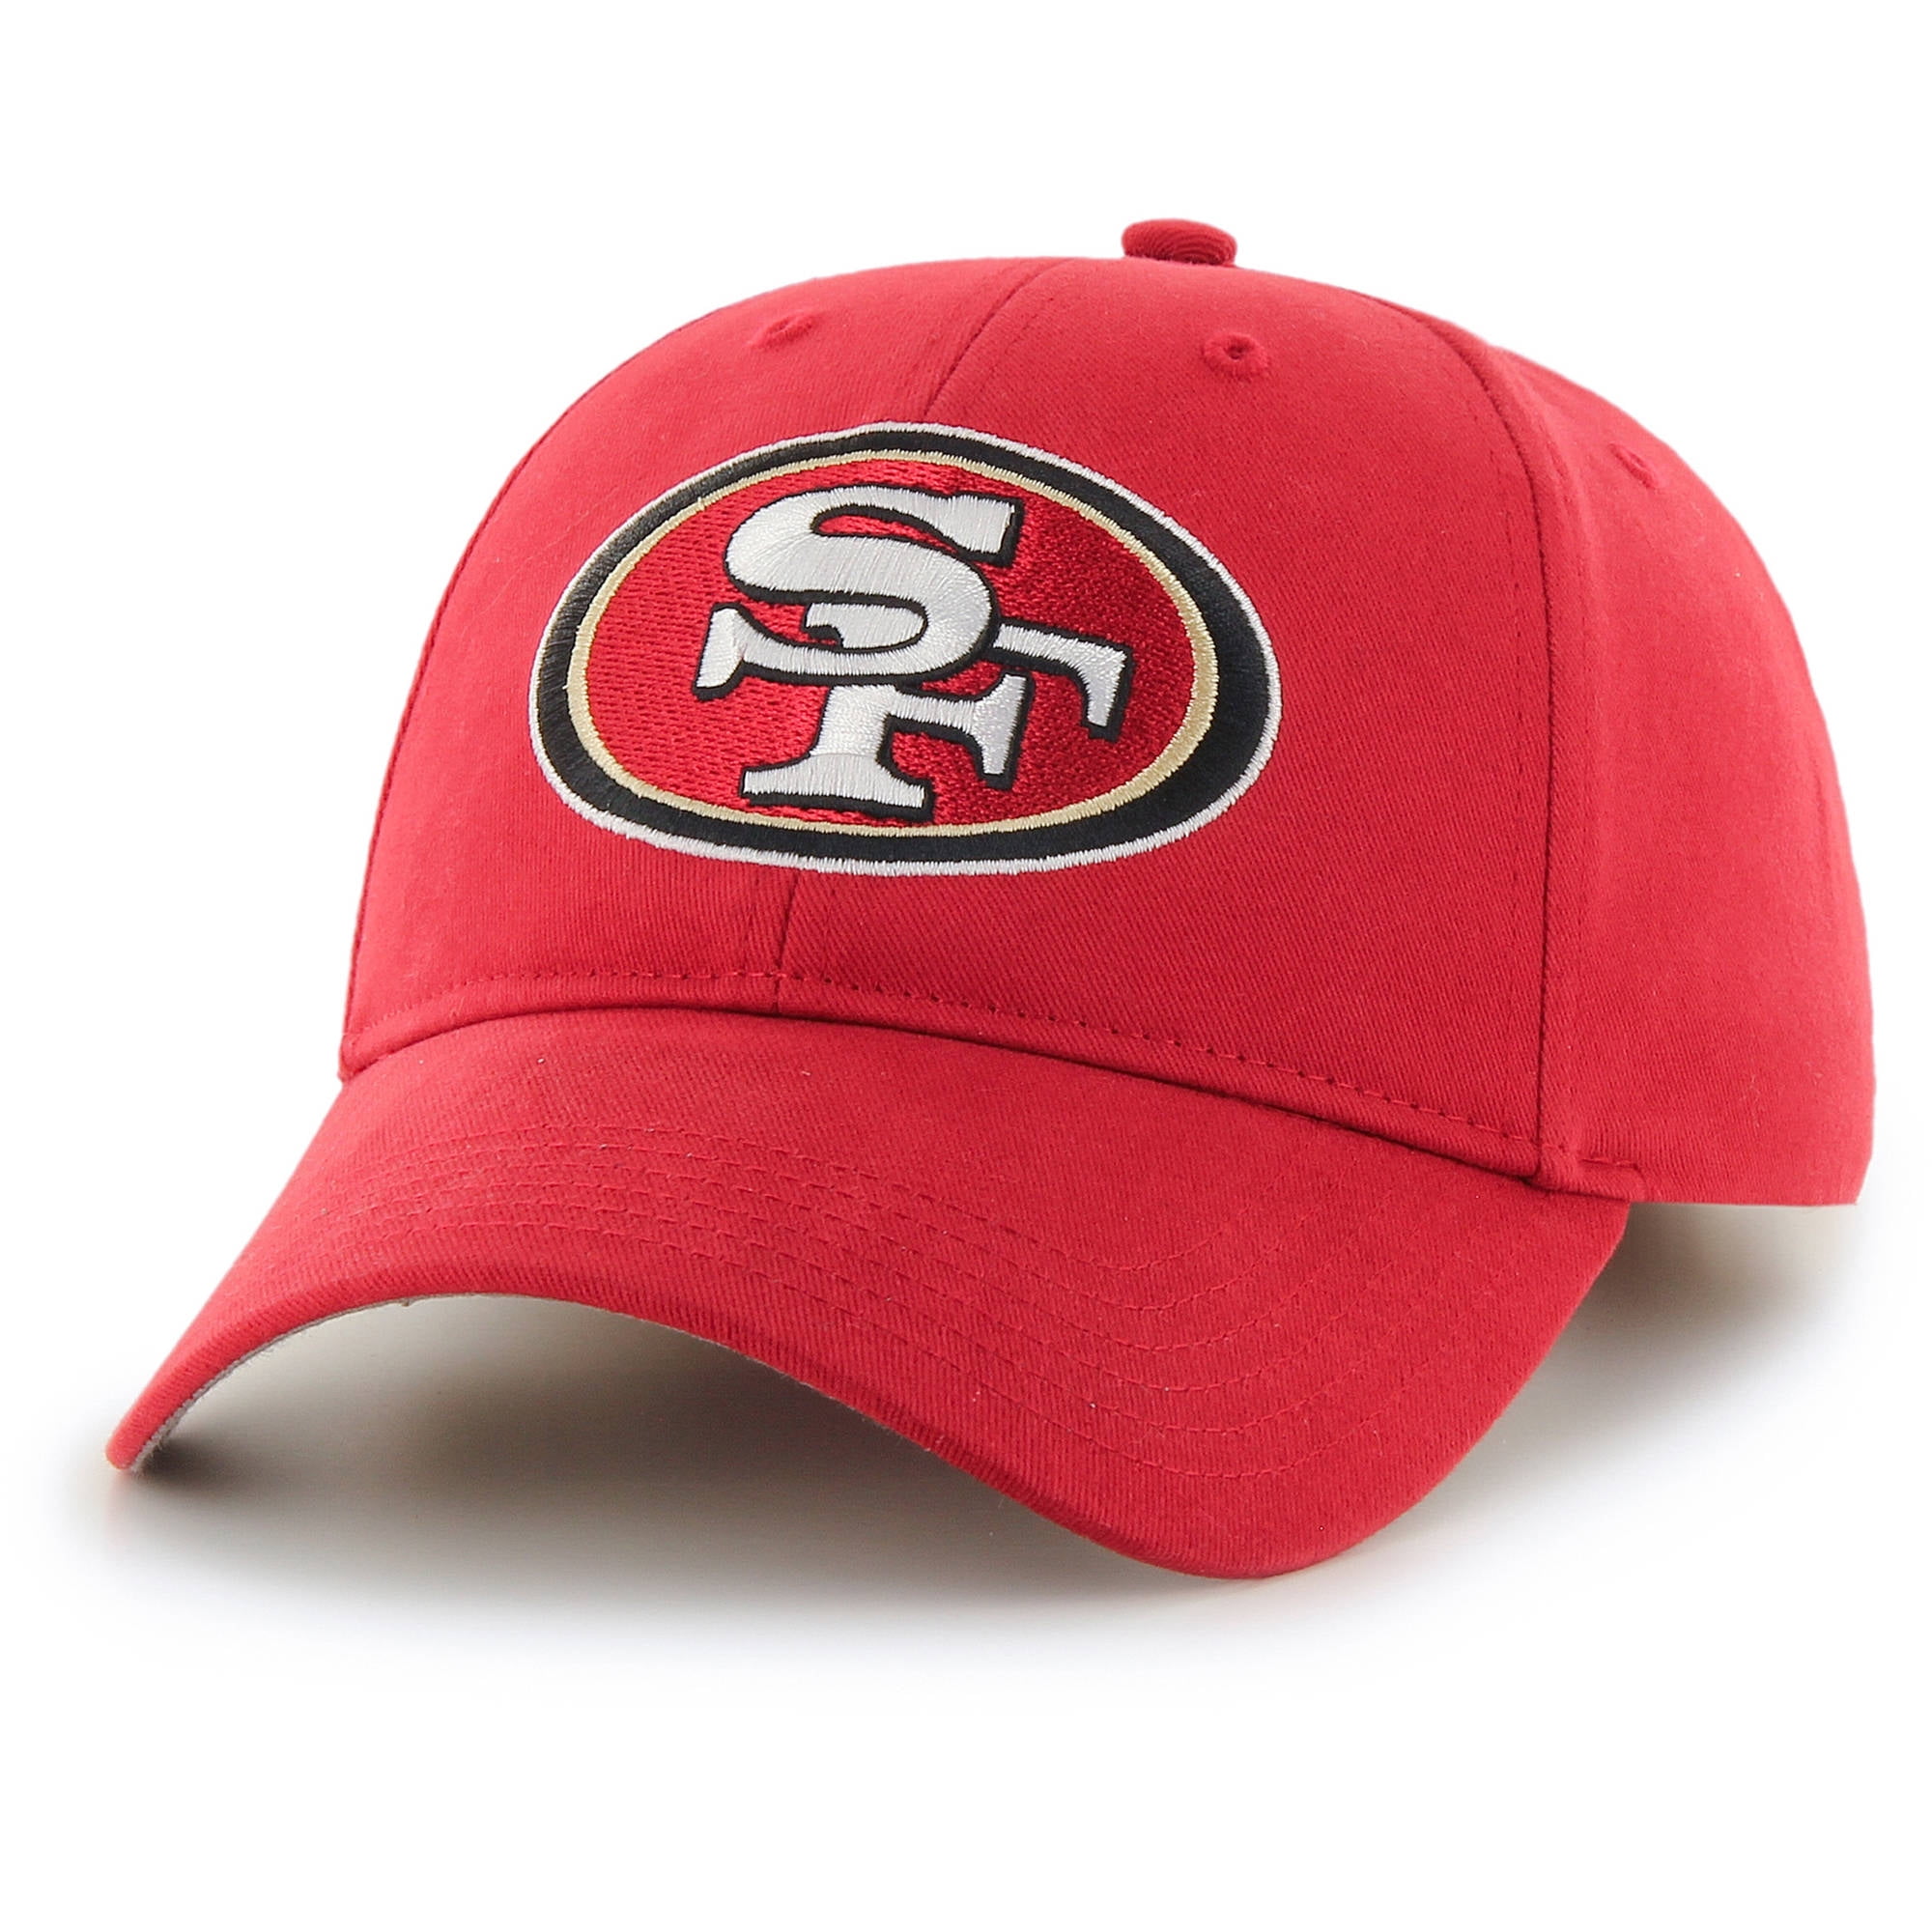 san francisco 49ers hat near me